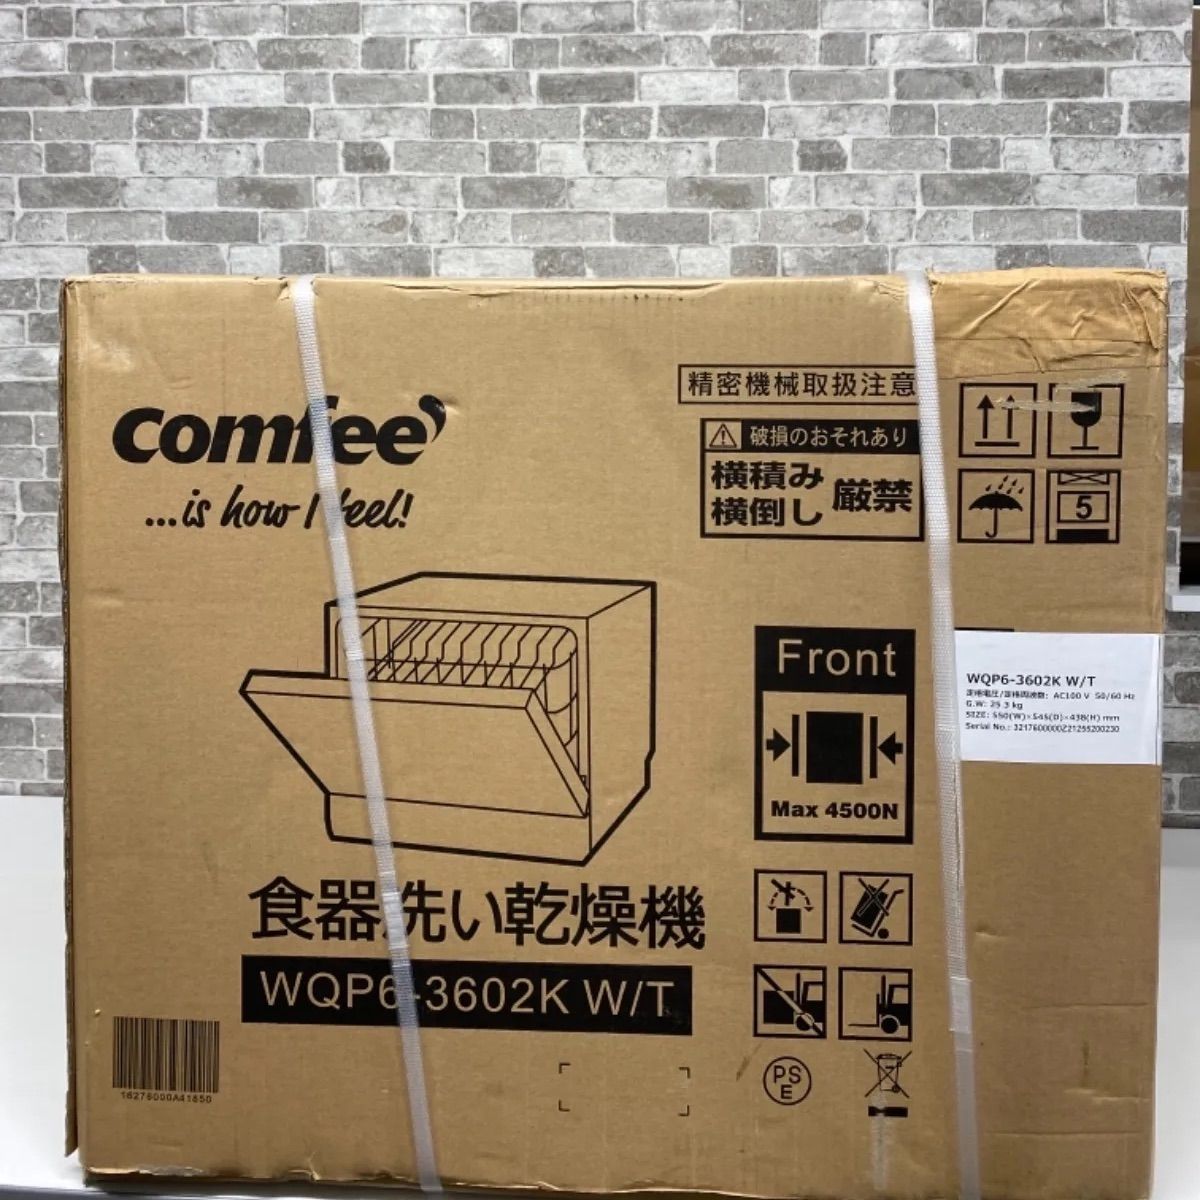 COMFEE' 食洗機 食器洗い乾燥機 WQP6-3602K W/T - メルカリ